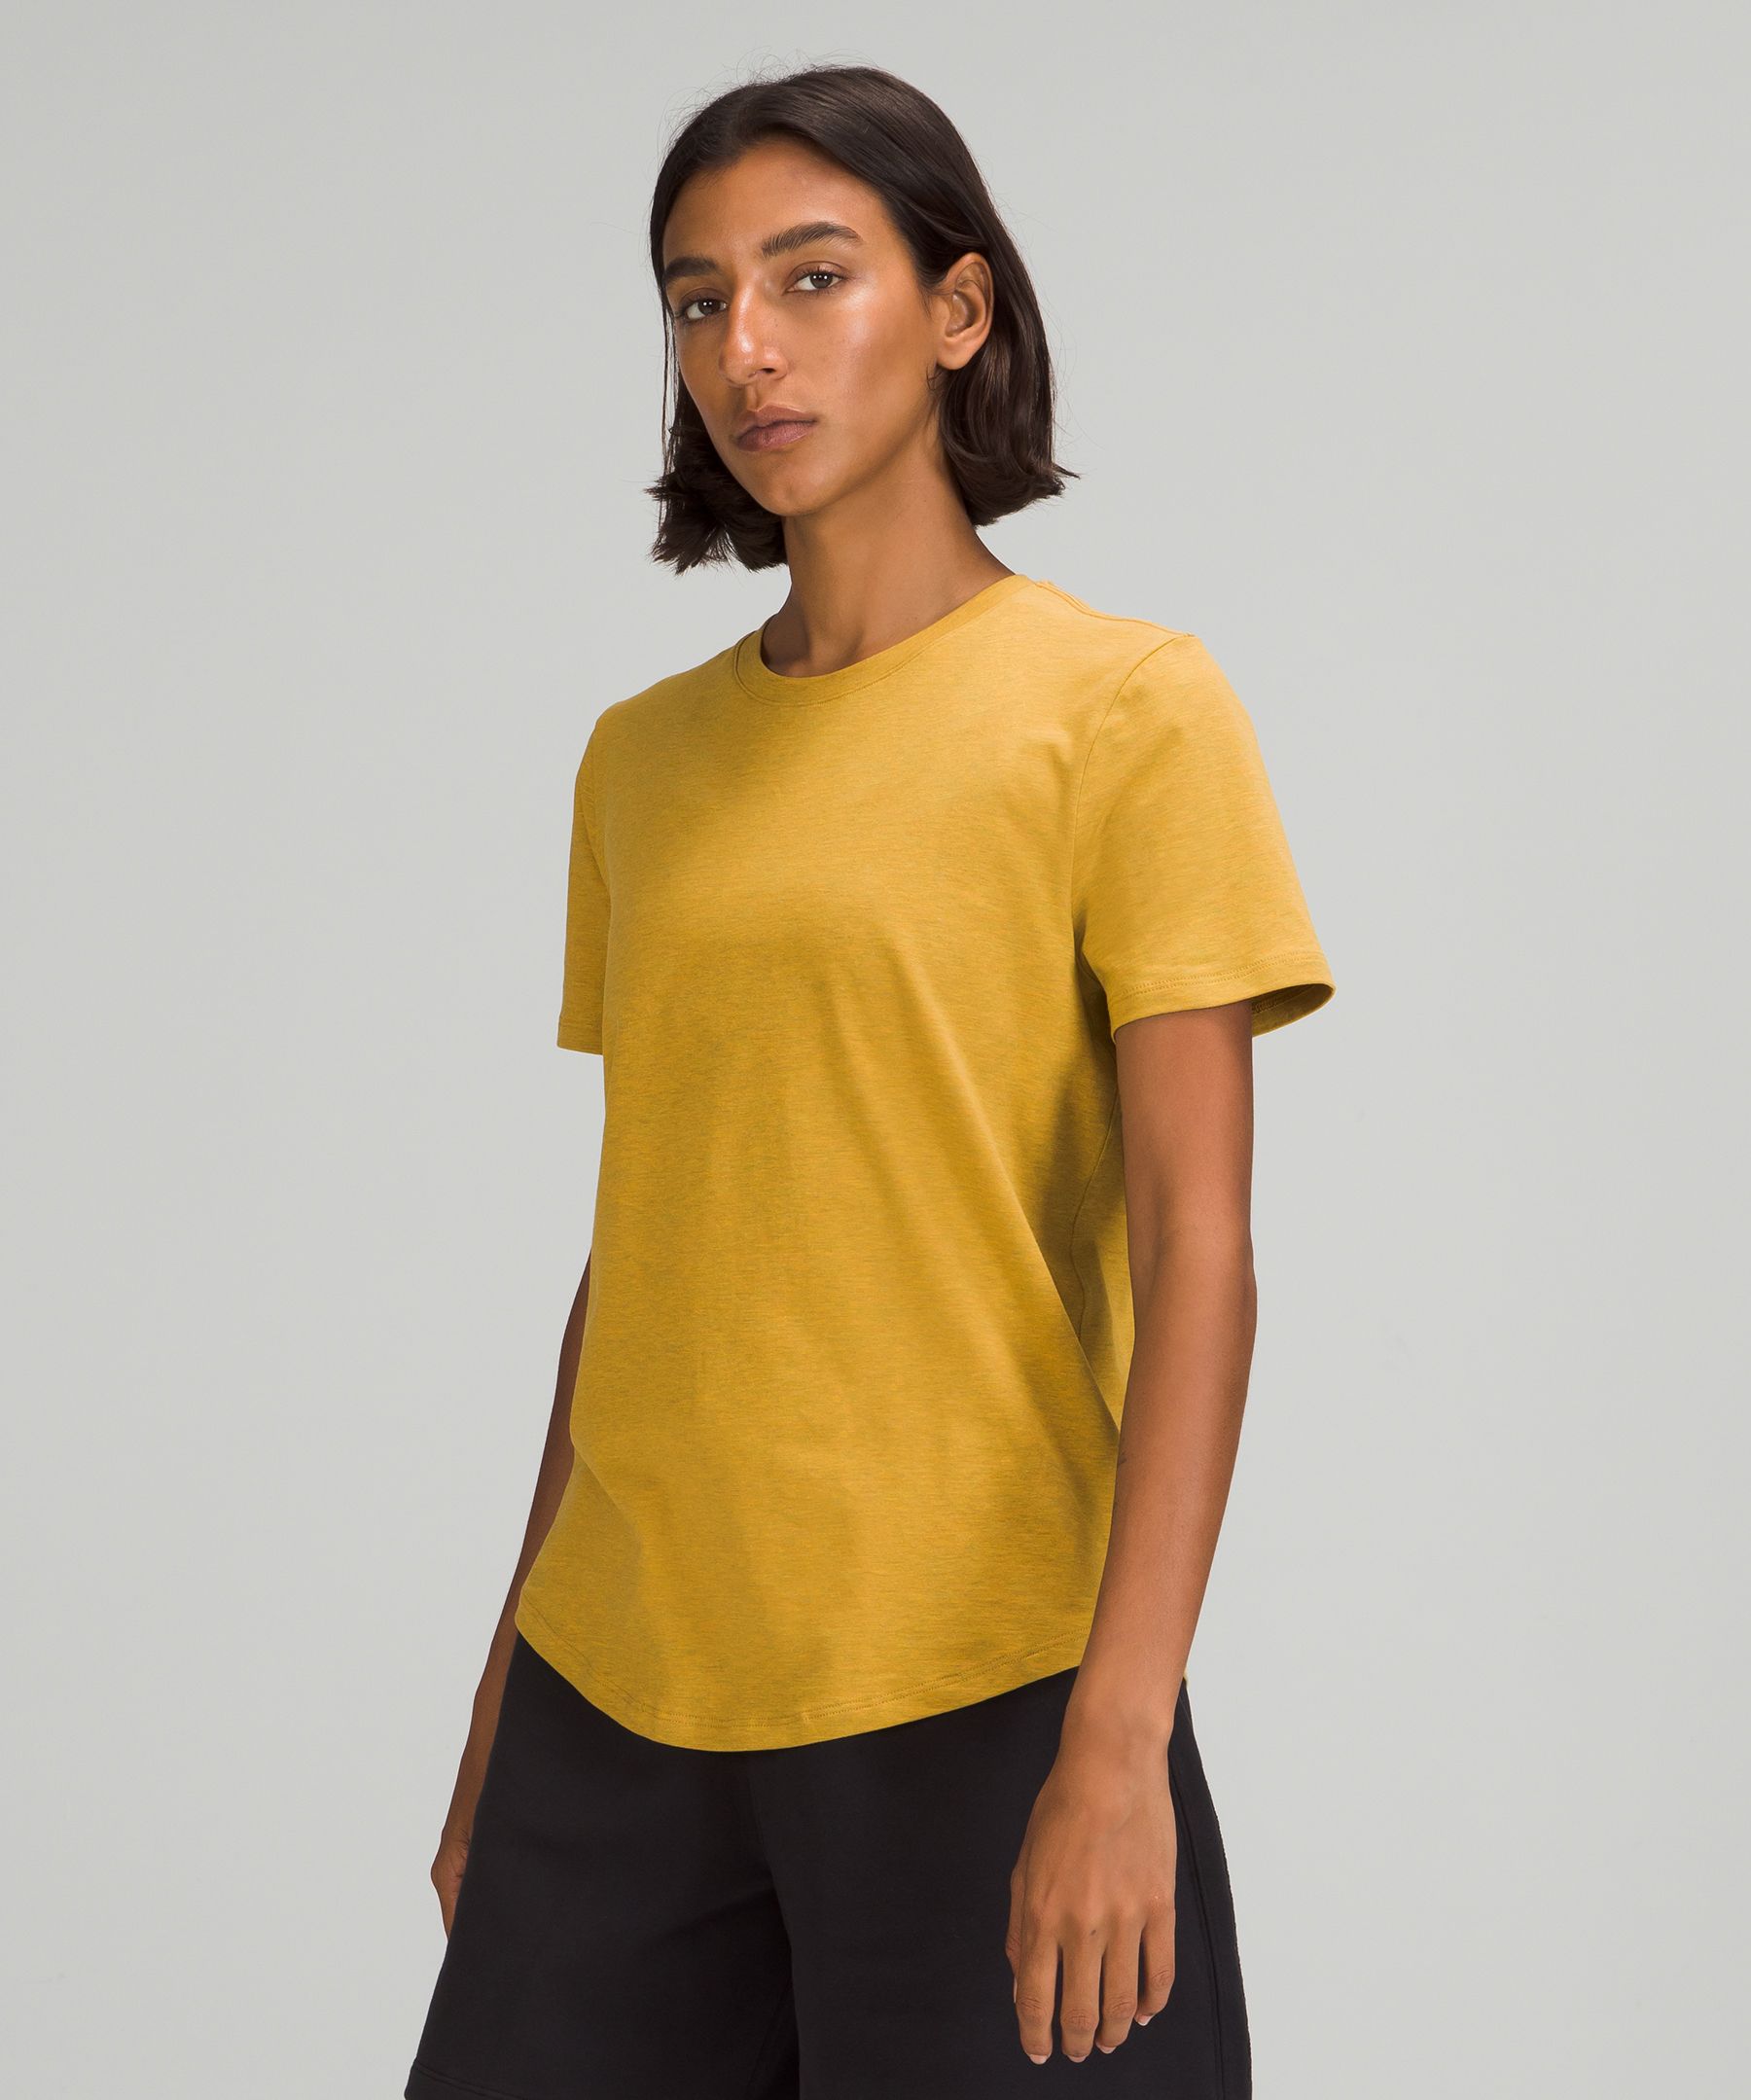 Lululemon Love Crew Short Sleeve T-shirt In Heathered Auric Gold